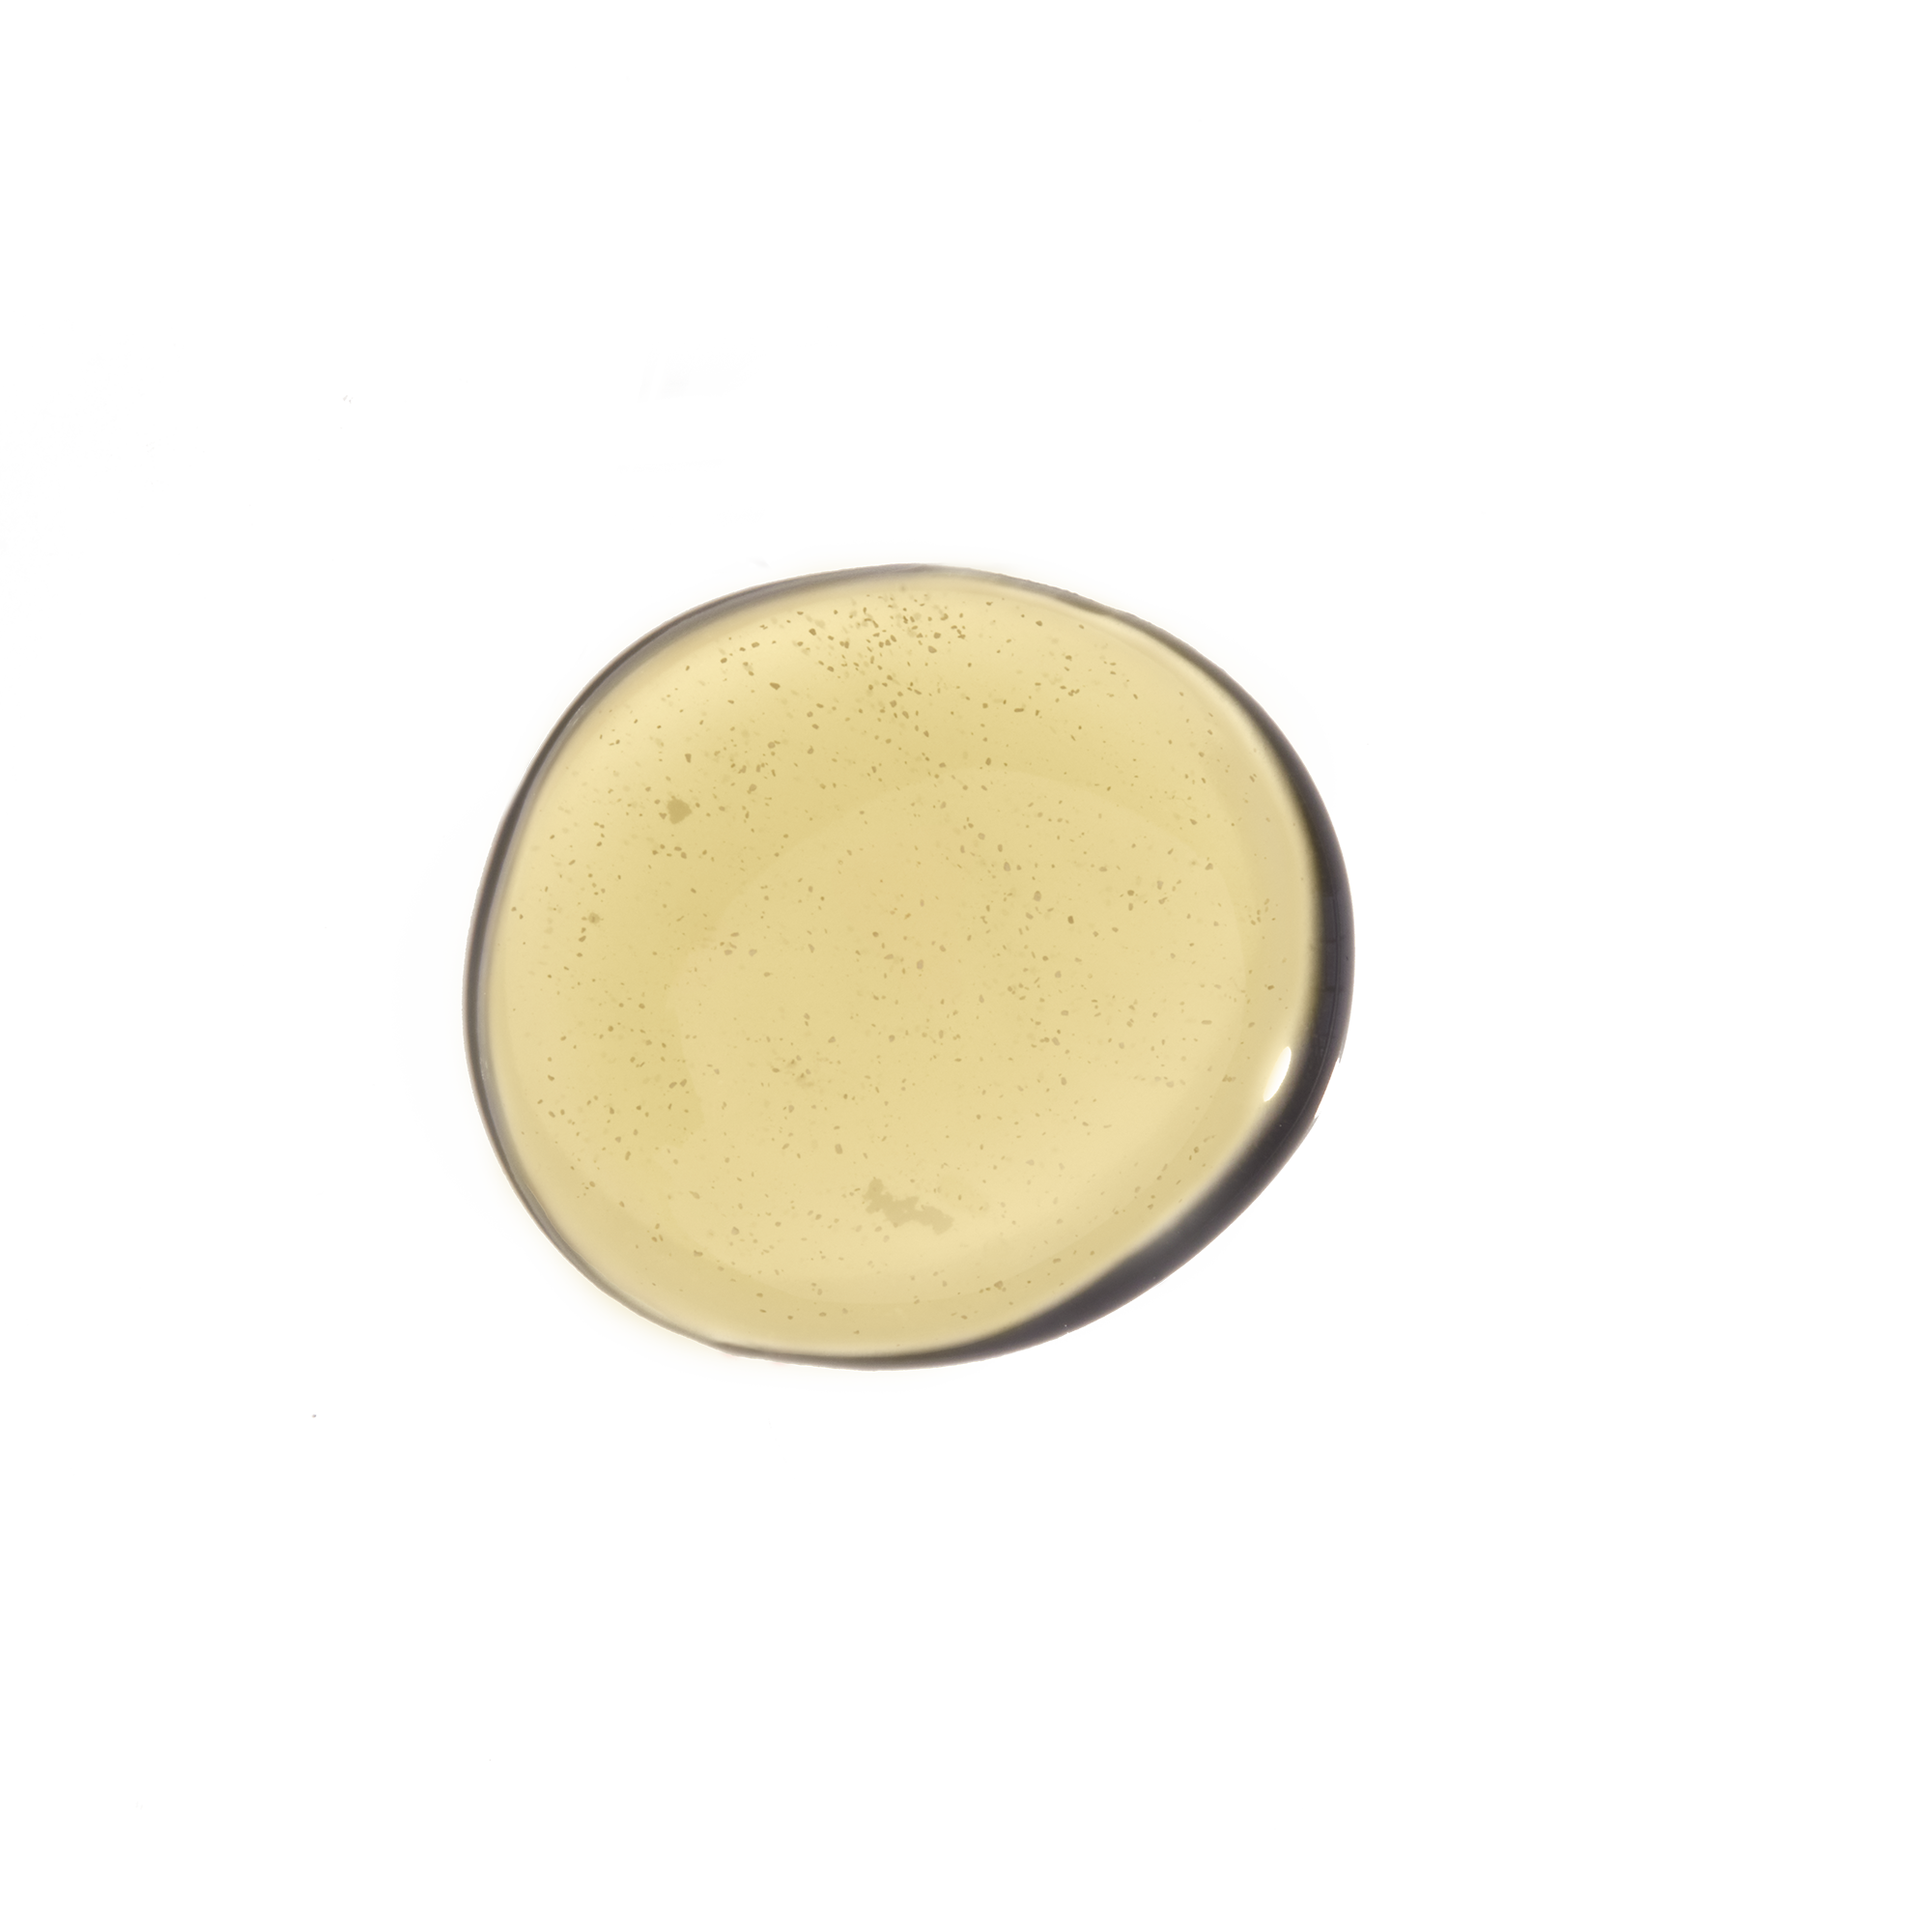 centella asiatica (cica) extract